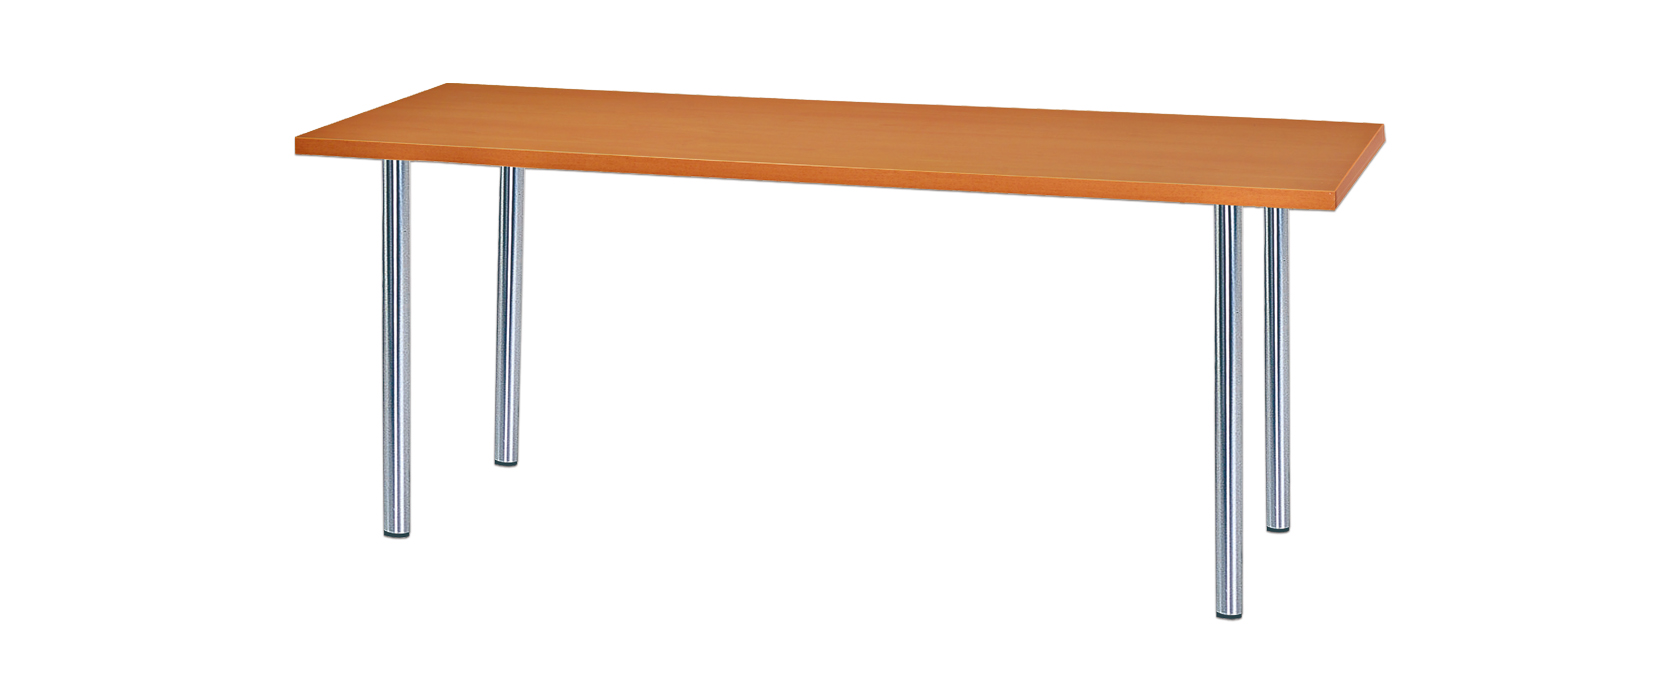 95FT02 方型平邊會議桌(有框電鍍桌腳)